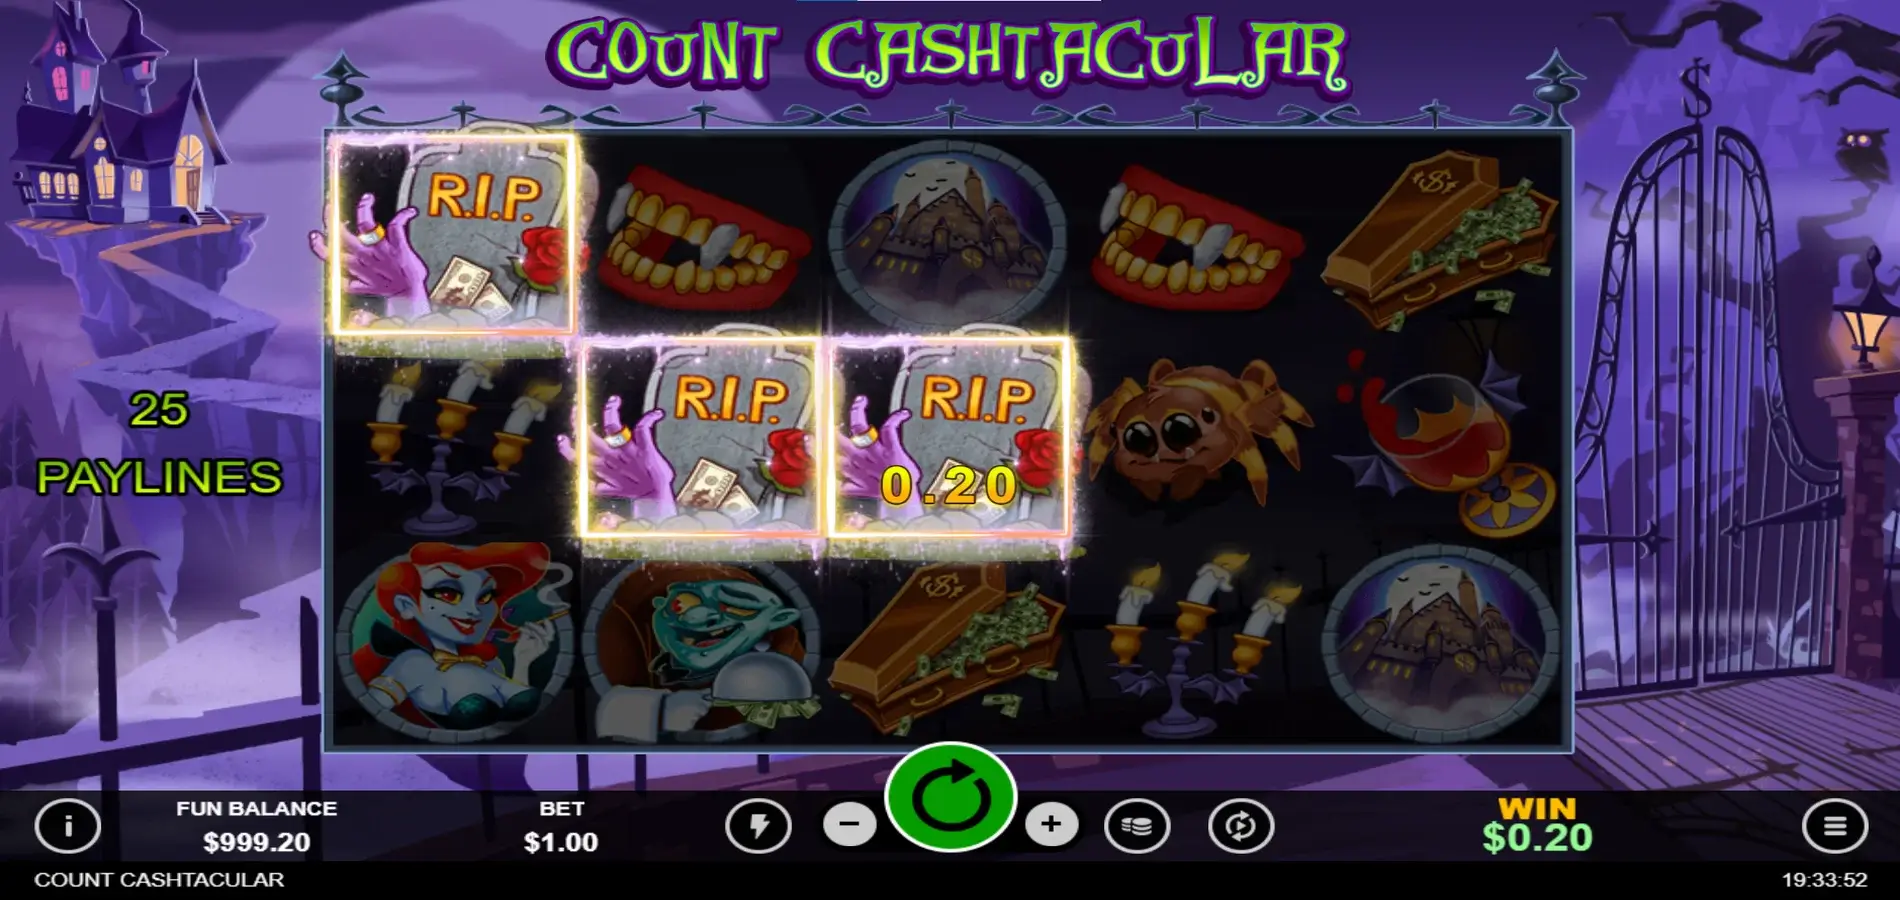 Count Cashtacular online slot game